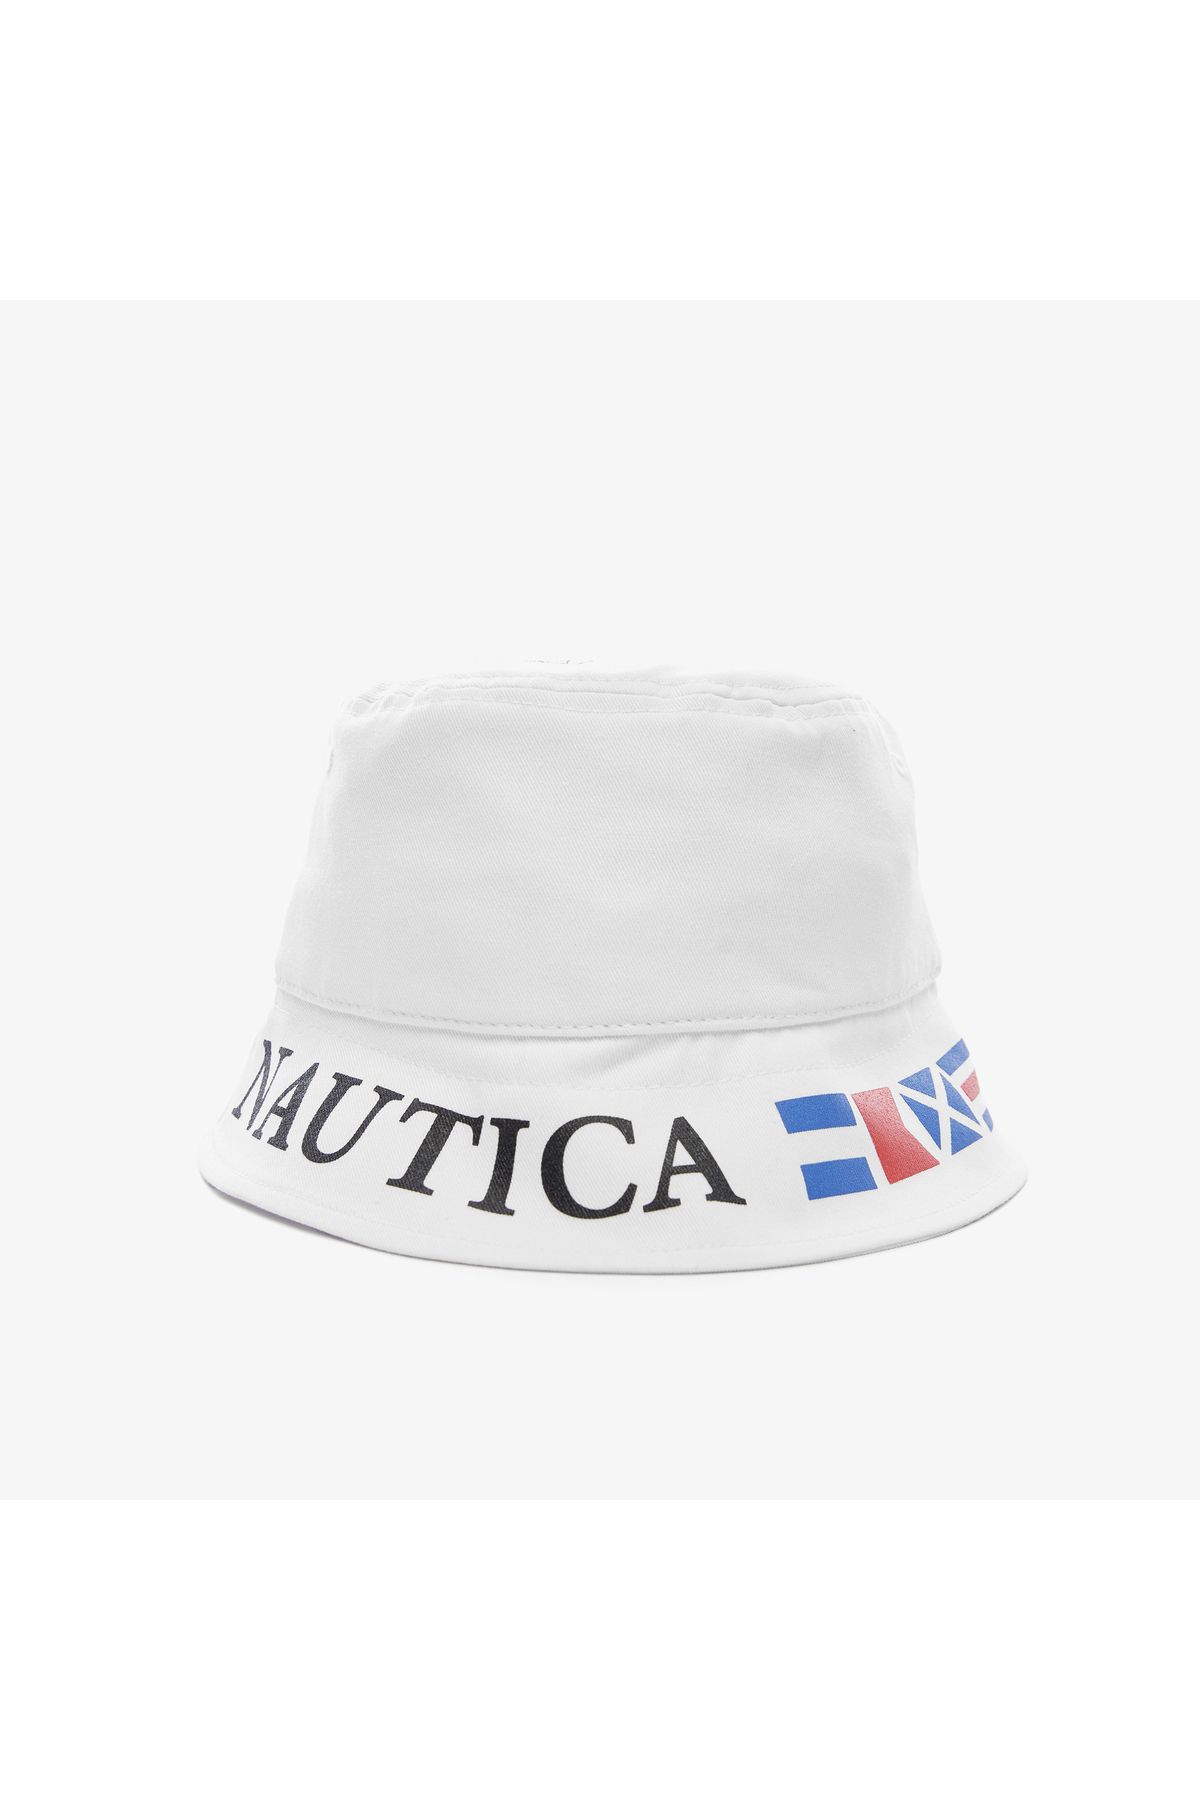 Nautica کلاه سفید unisex